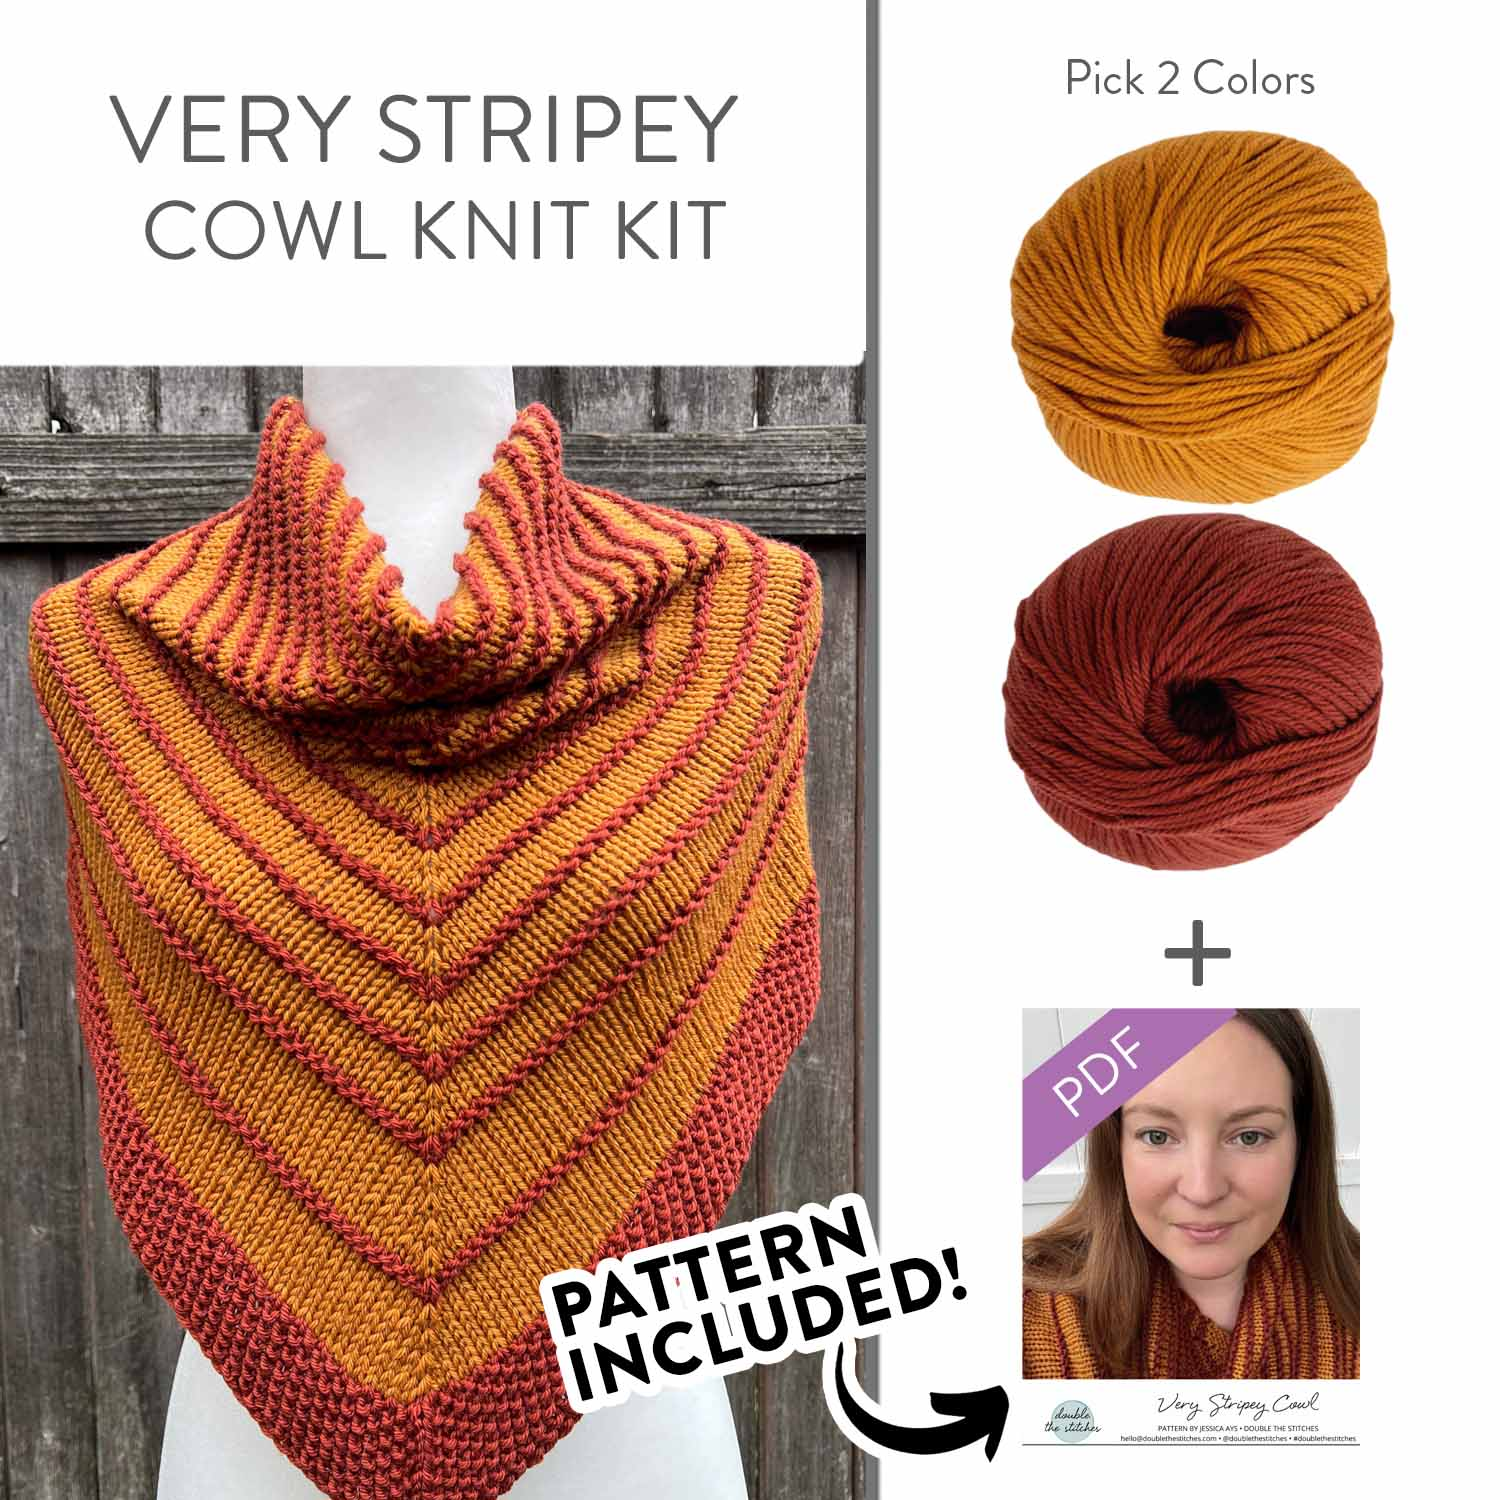 Very Stripey Cowl Knit Kit